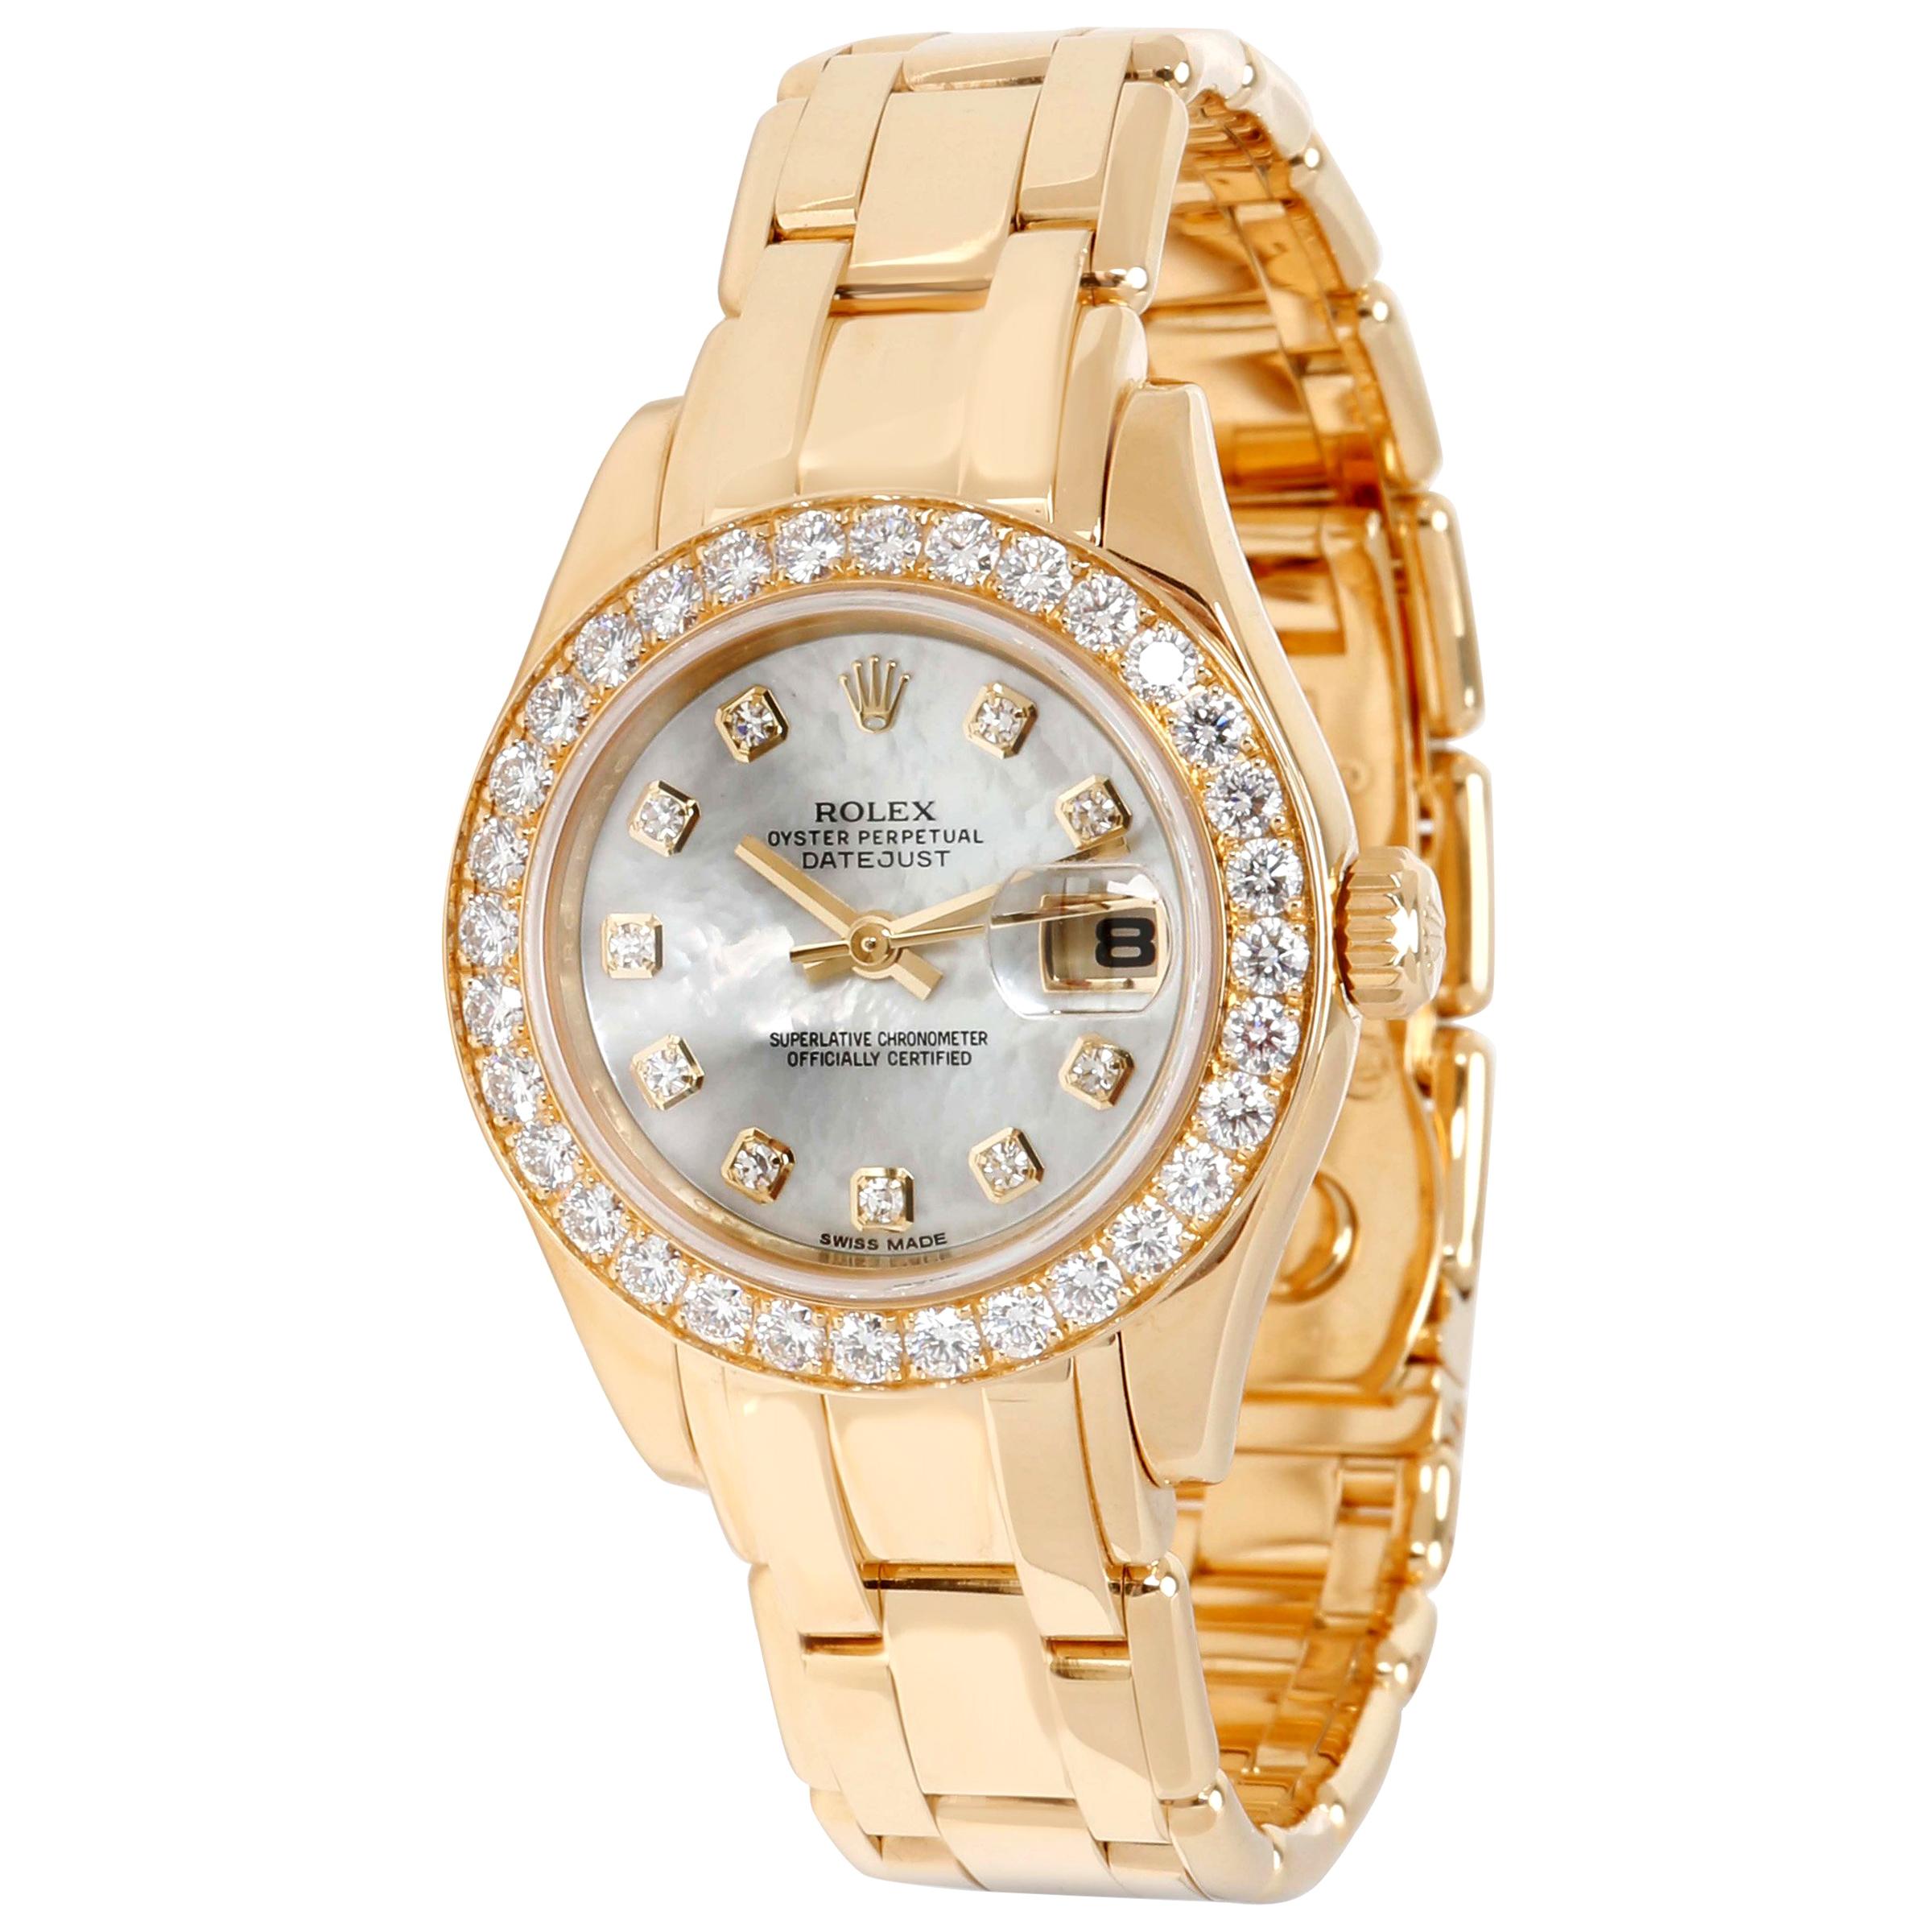 Rolex Pearlmaster 80298 Women's Diamond Watch in 18 Karat Yellow Gold